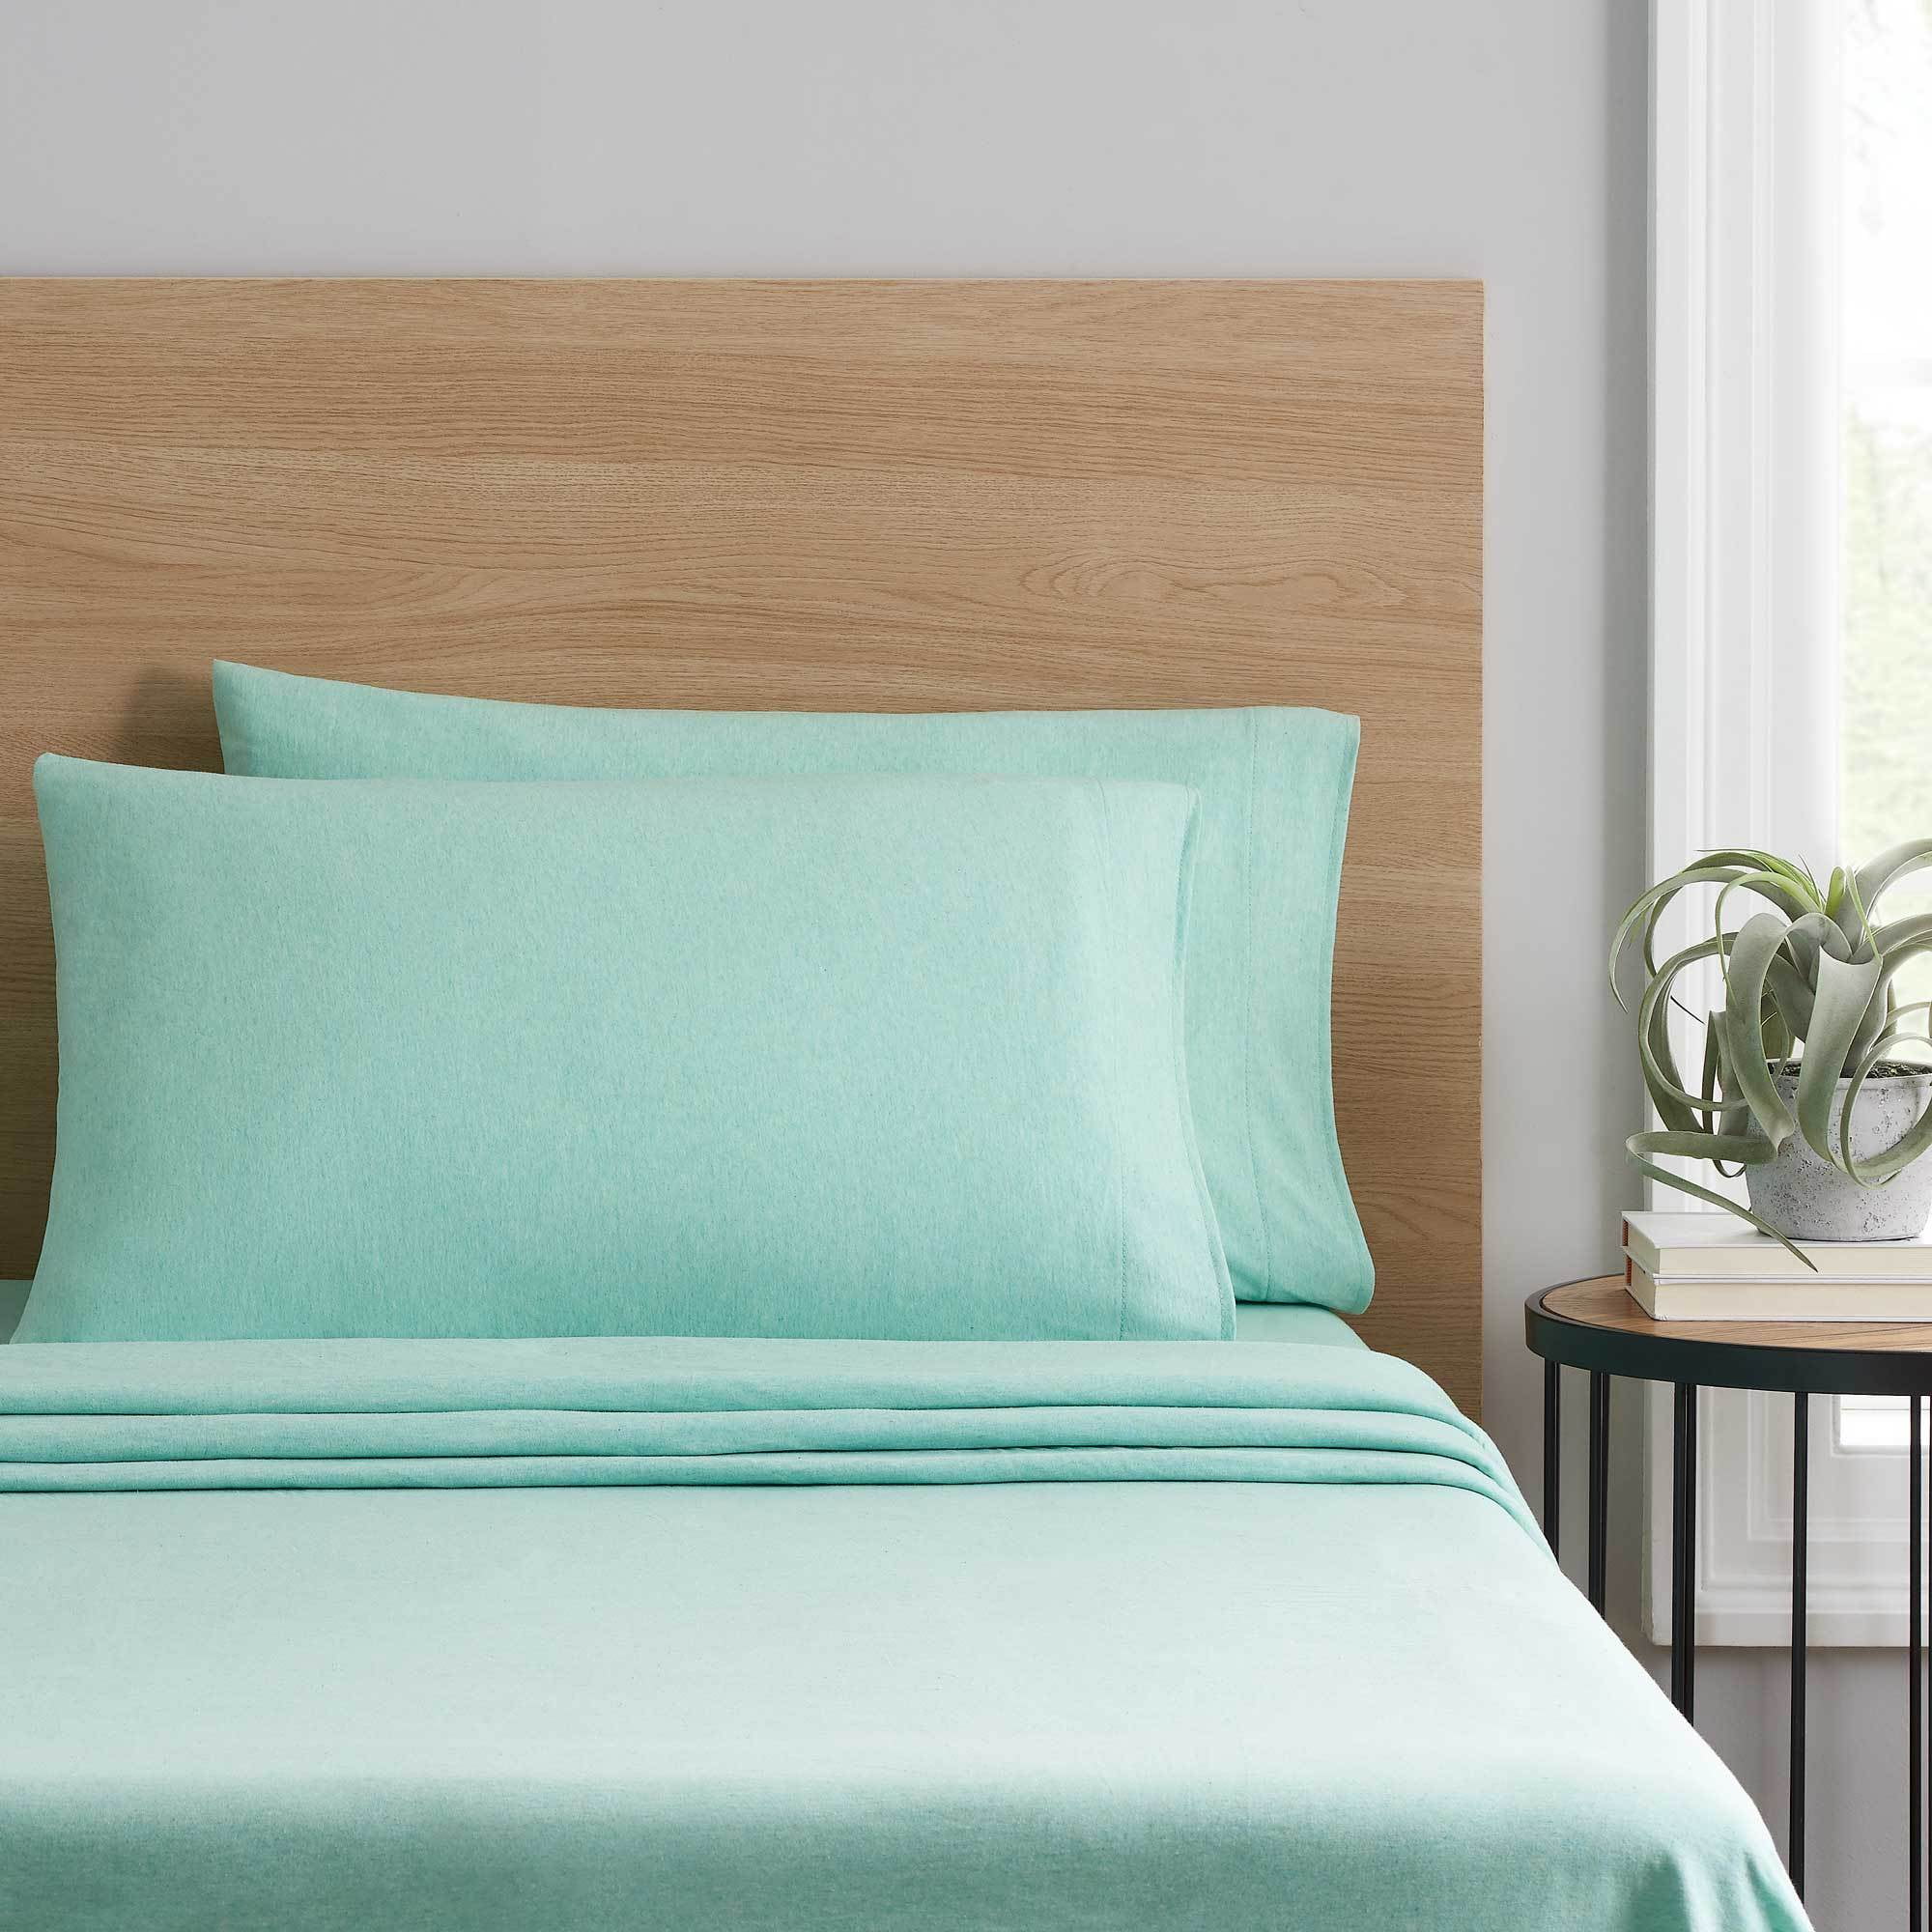 Bed Set Percale Cotton Bedding Sheet Set  400 TC Extra Size & Color 15" Drop 